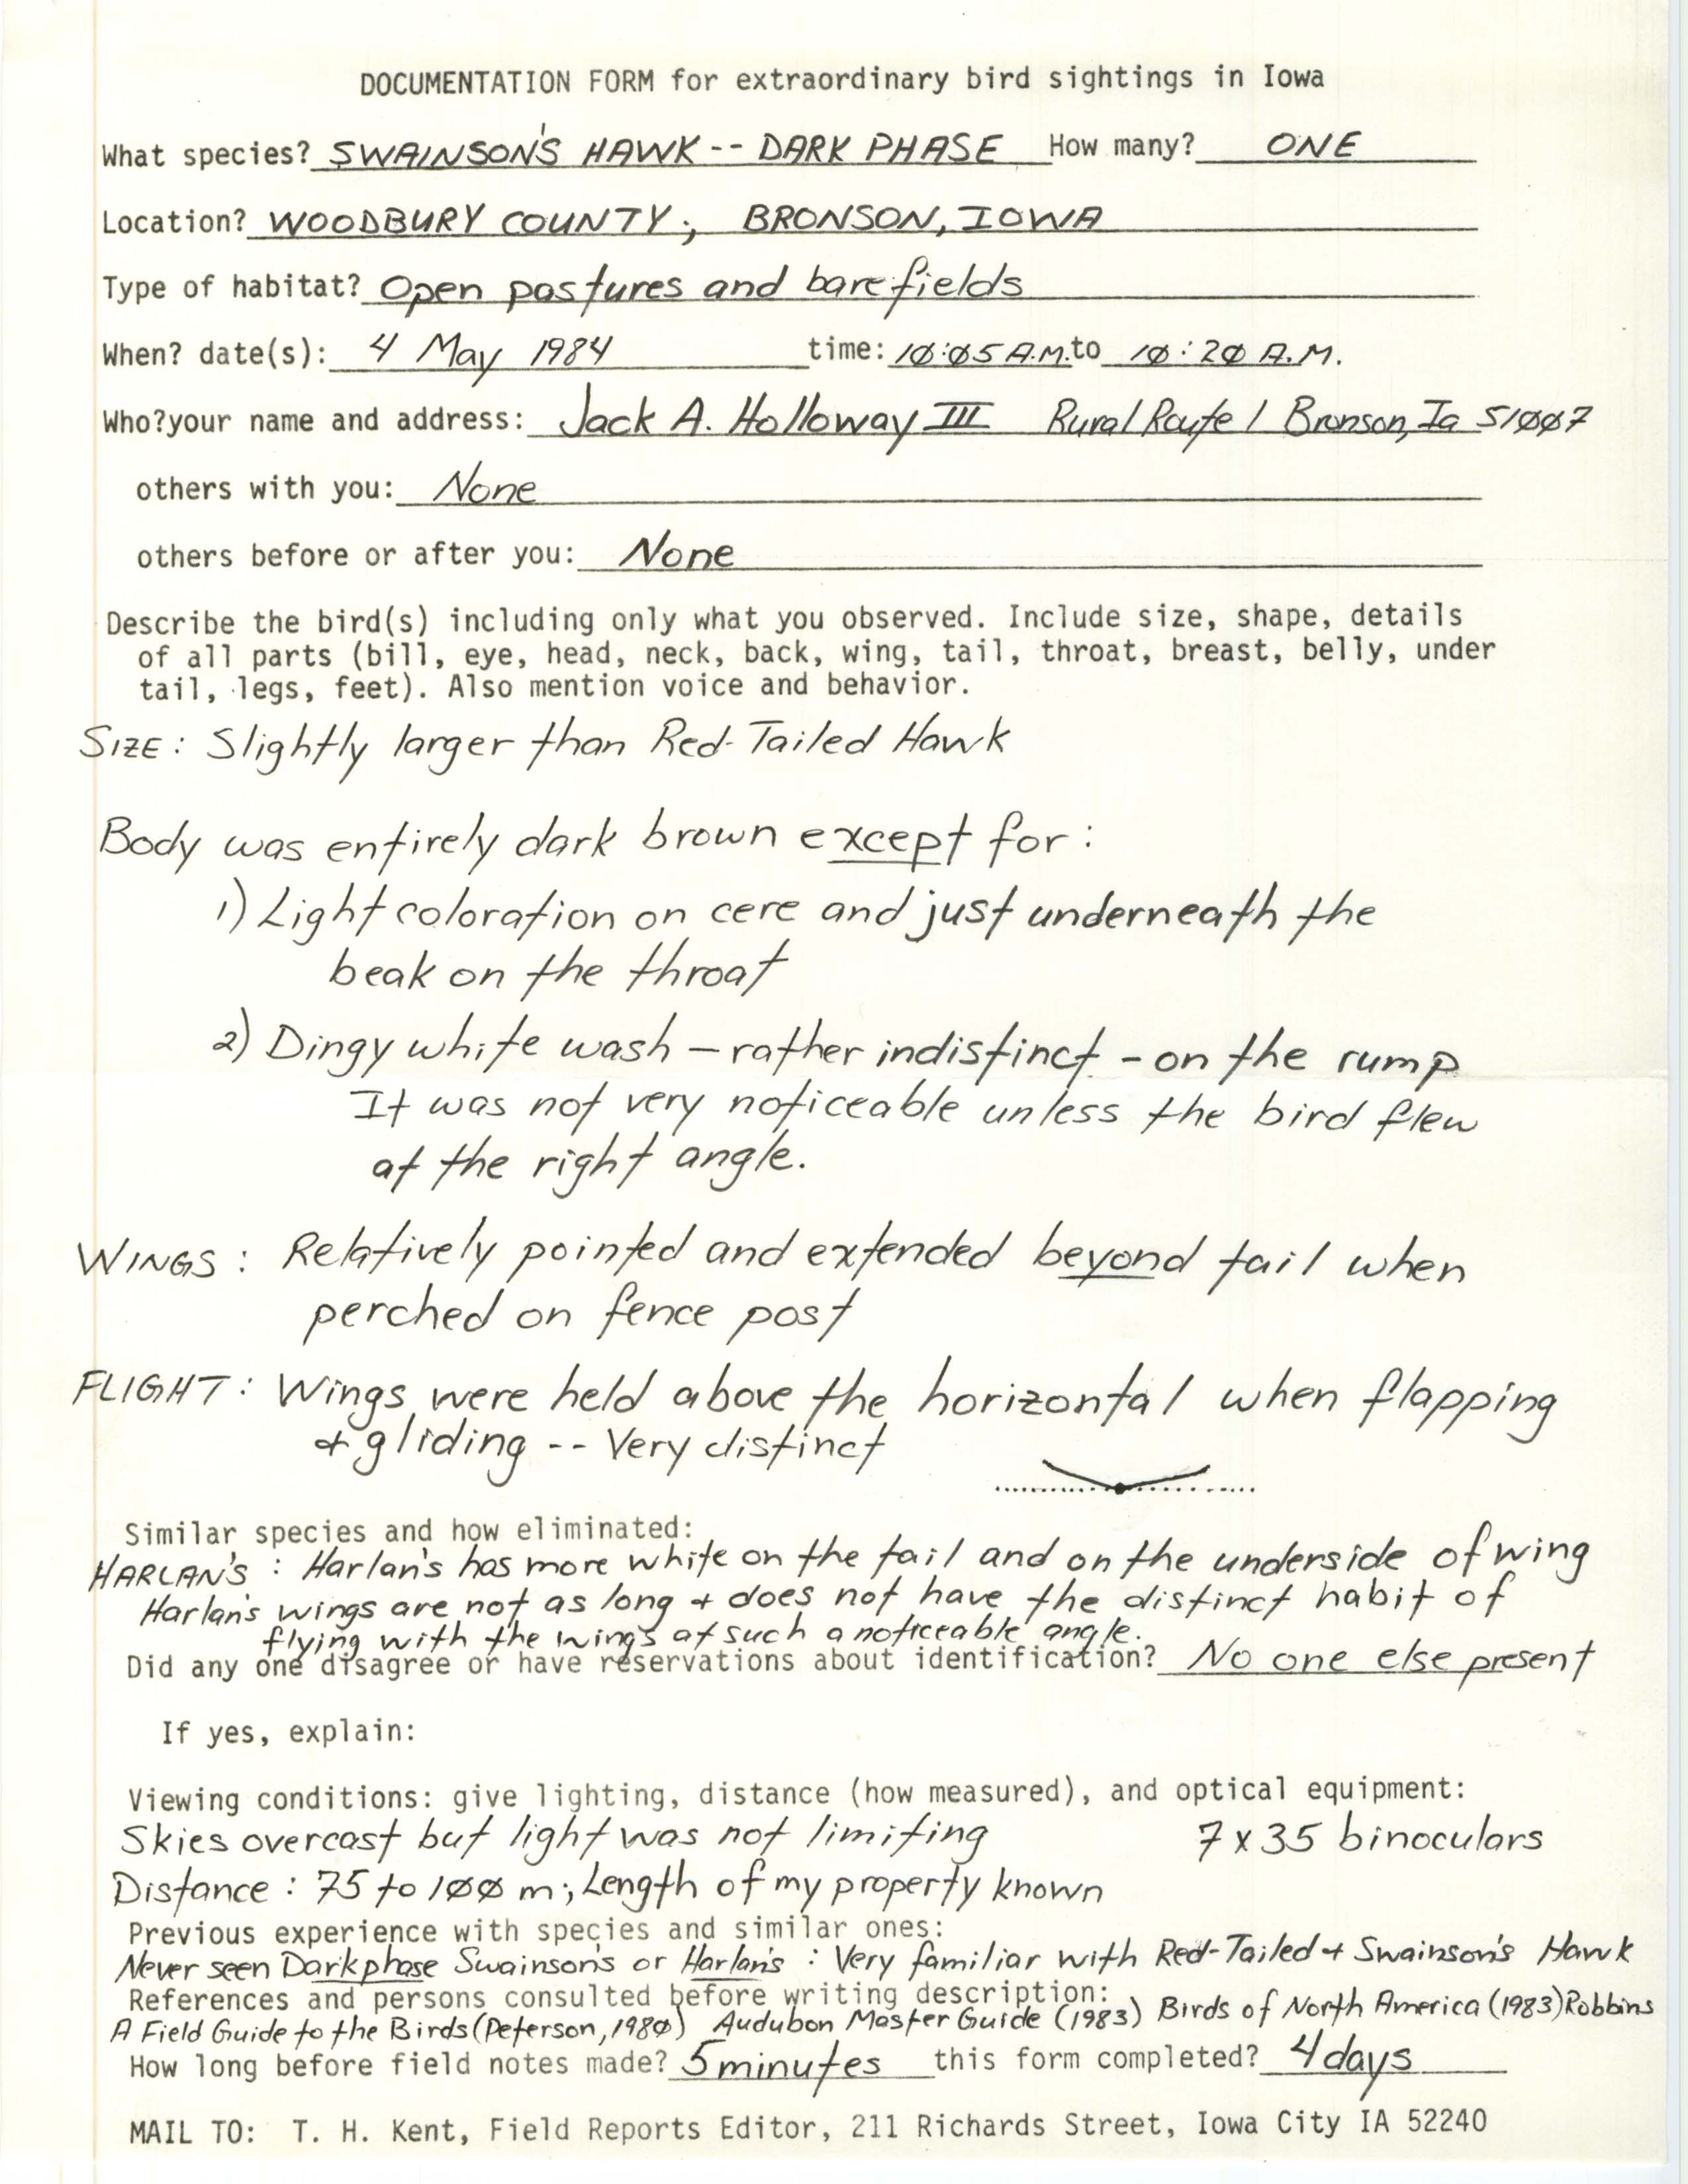 Rare bird documentation form for Swainson's Hawk at Bronson, 1984